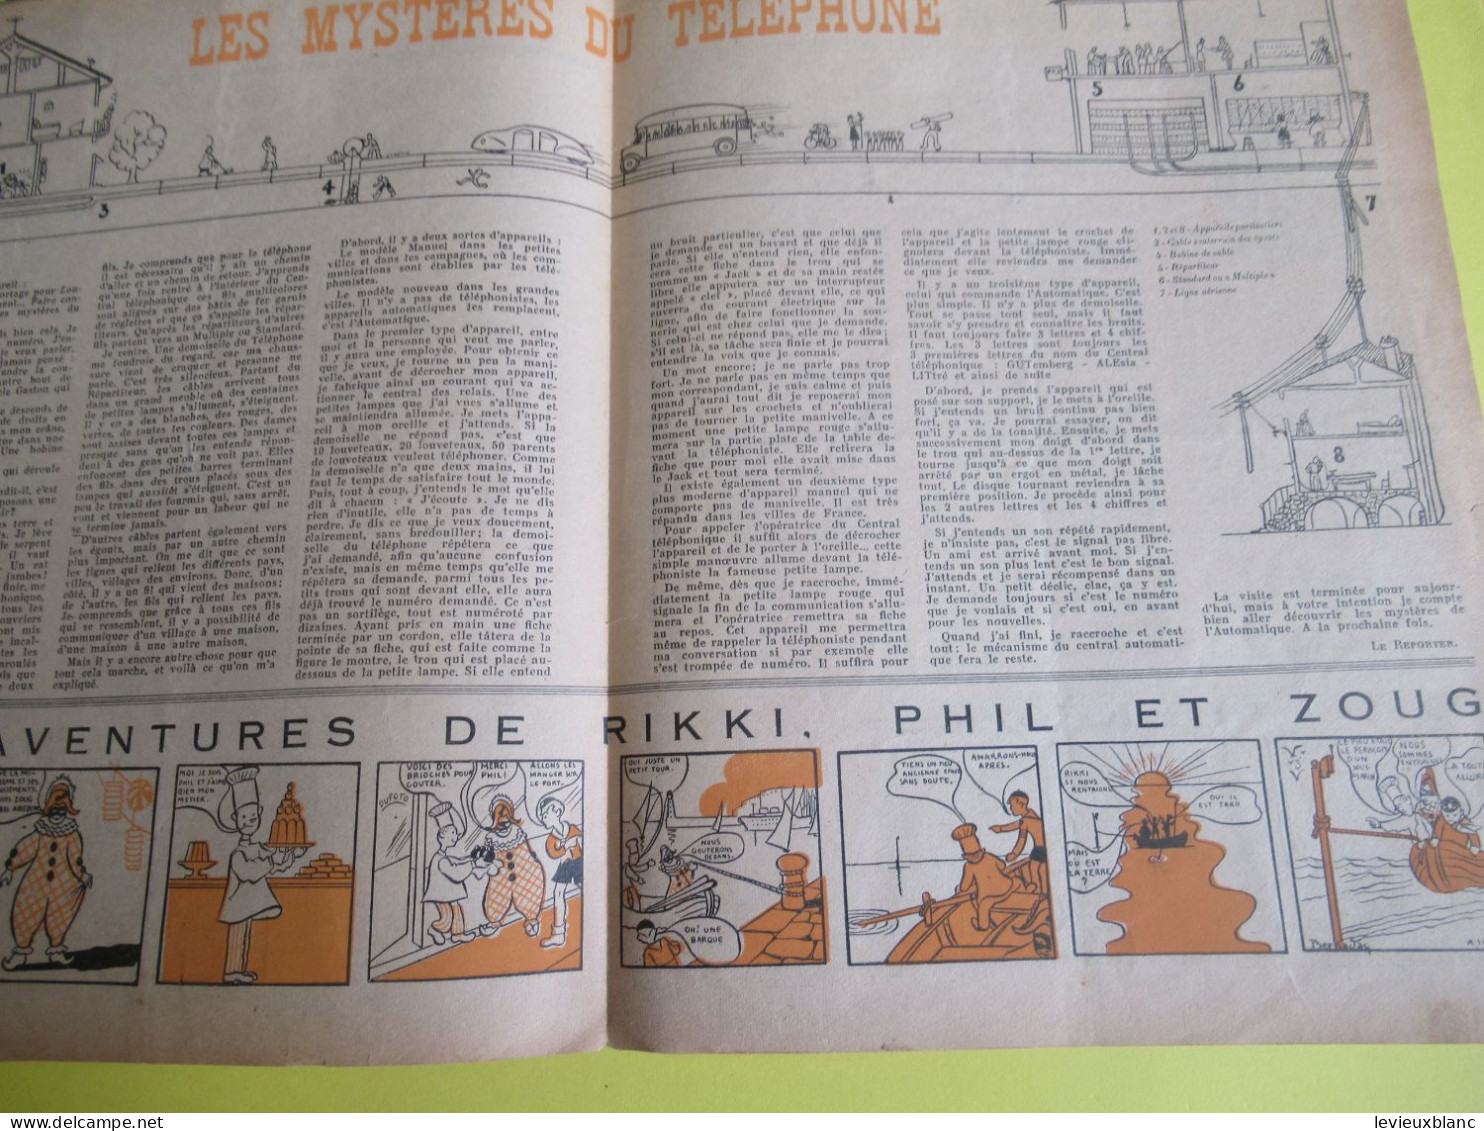 SCOUT De France/LOUVETEAU/Revue Bimensuelle/ N° 1- 2-3- 4- 5-7- 9-10- 11-12-13-14-19-20/1949-1950    VJ146 - Padvinderij